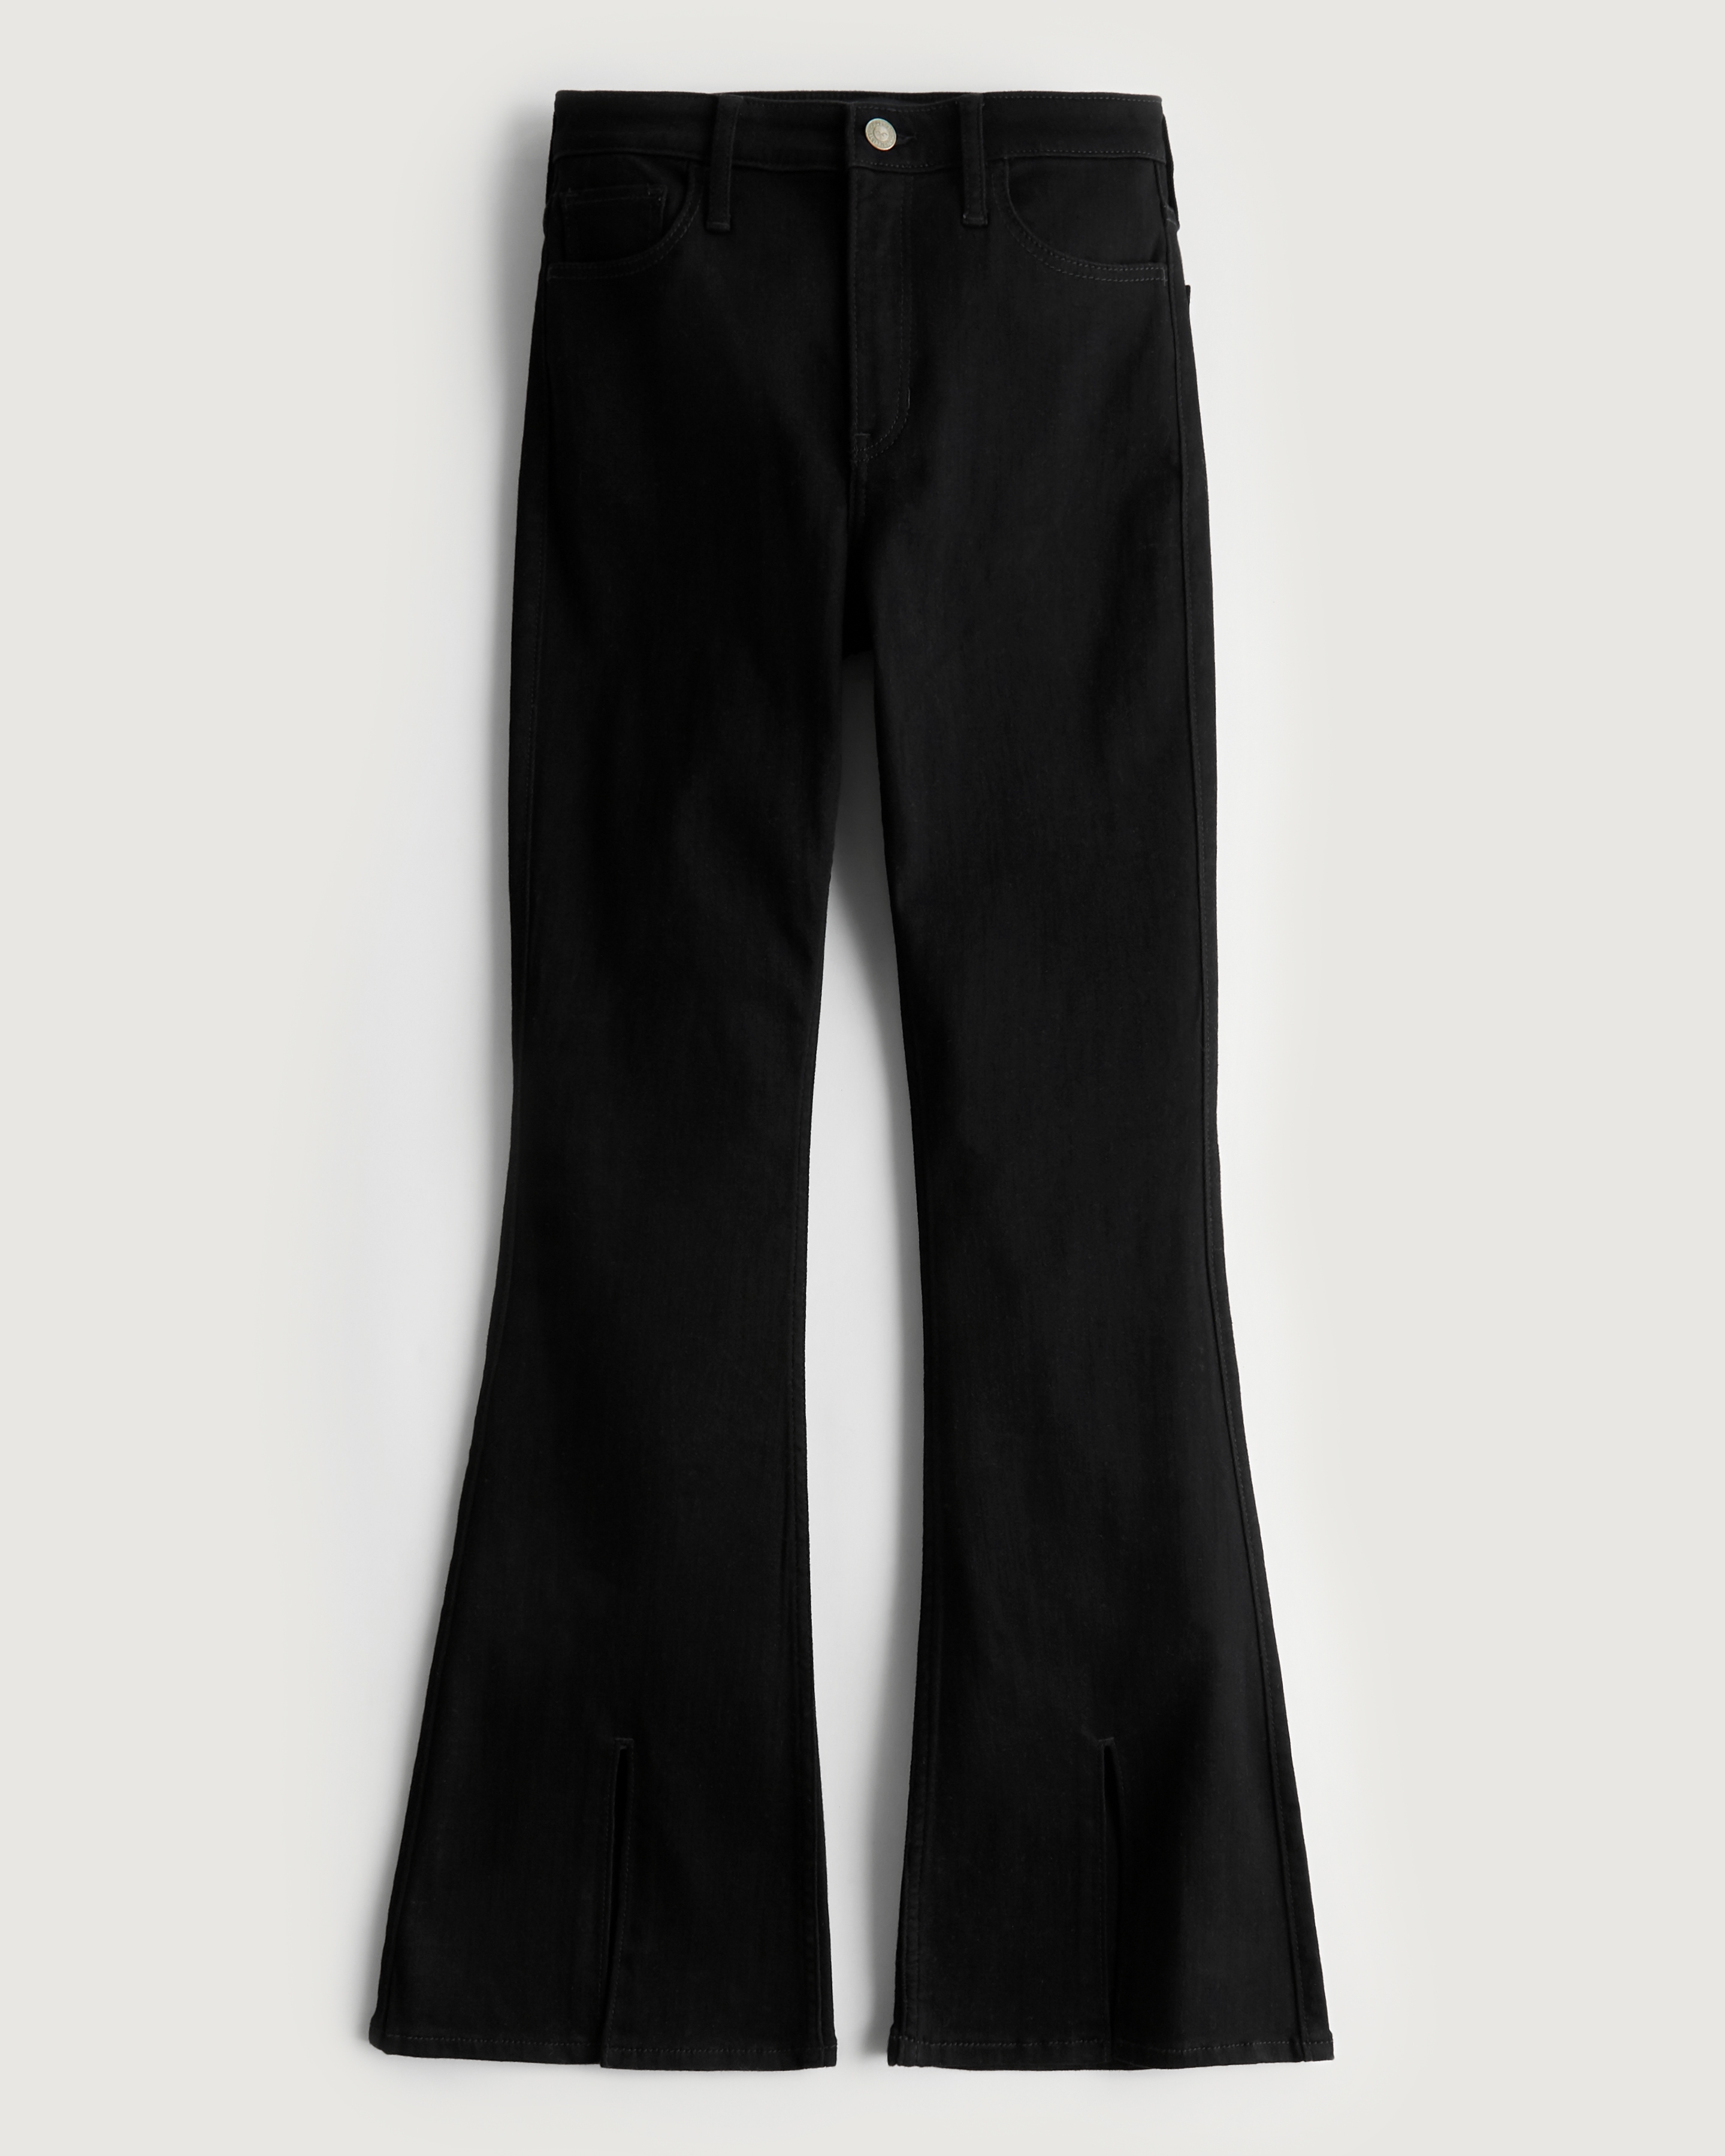 Hollister high rise slit flare jeans in black